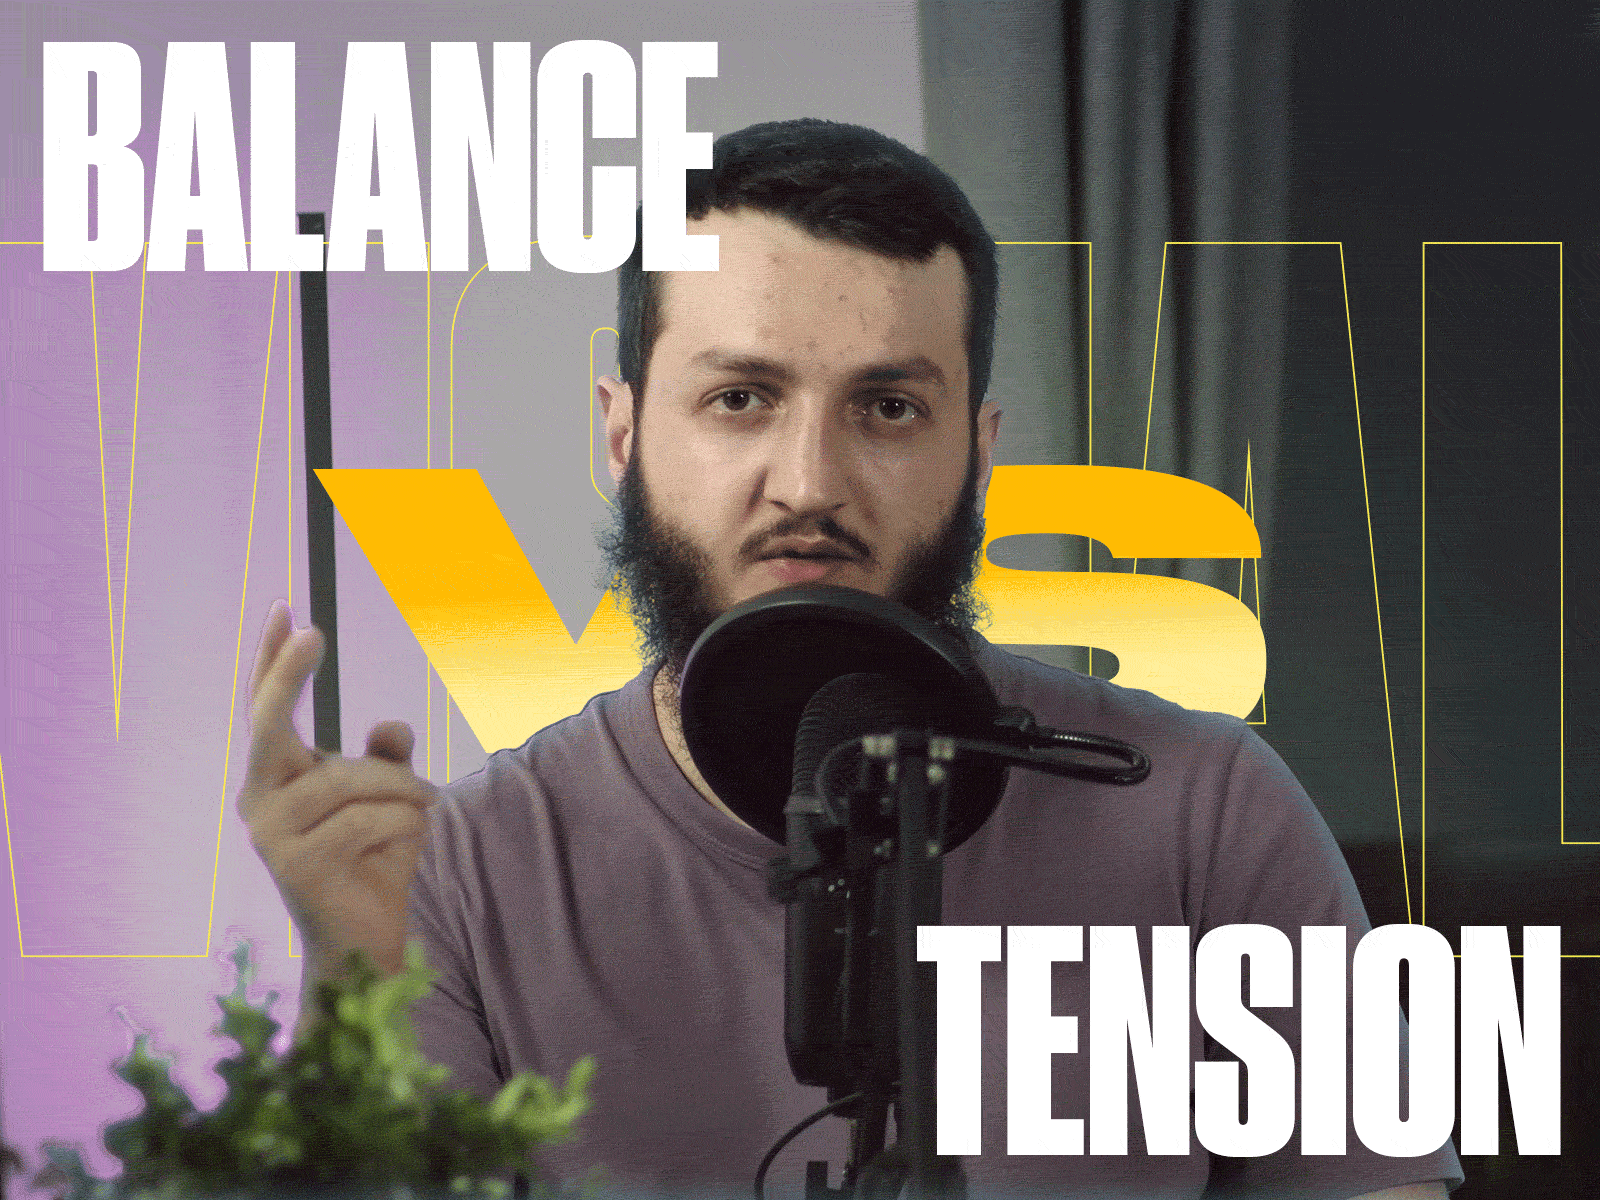 Visual Balance VS Visual Tension